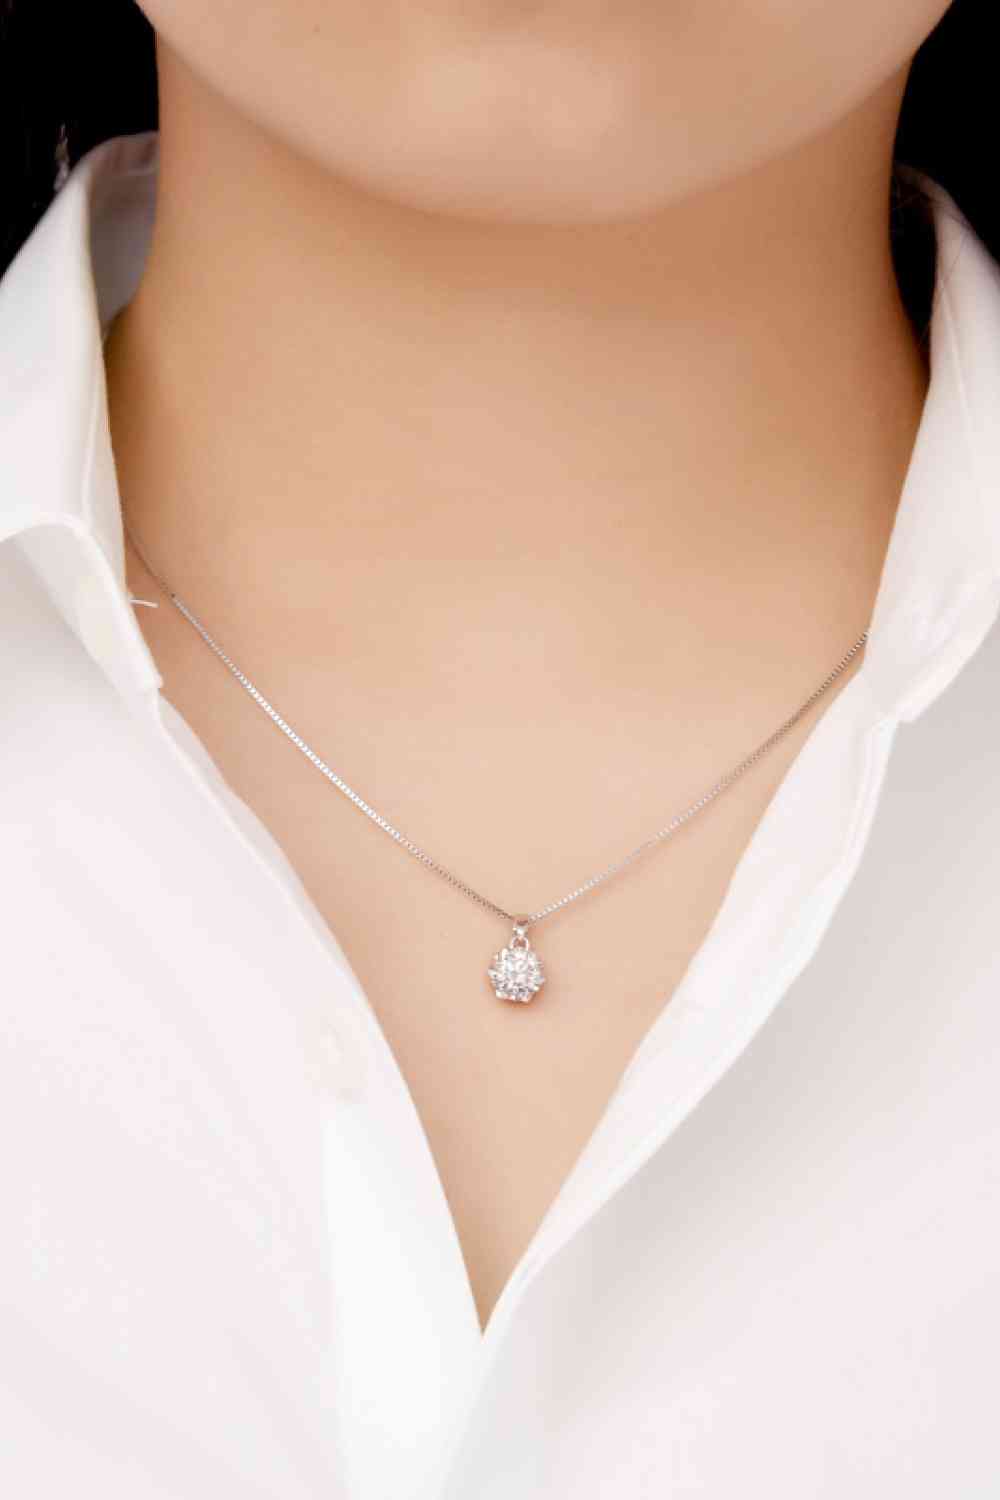 1 Carat Moissanite Pendant Platinum-Plated Necklace